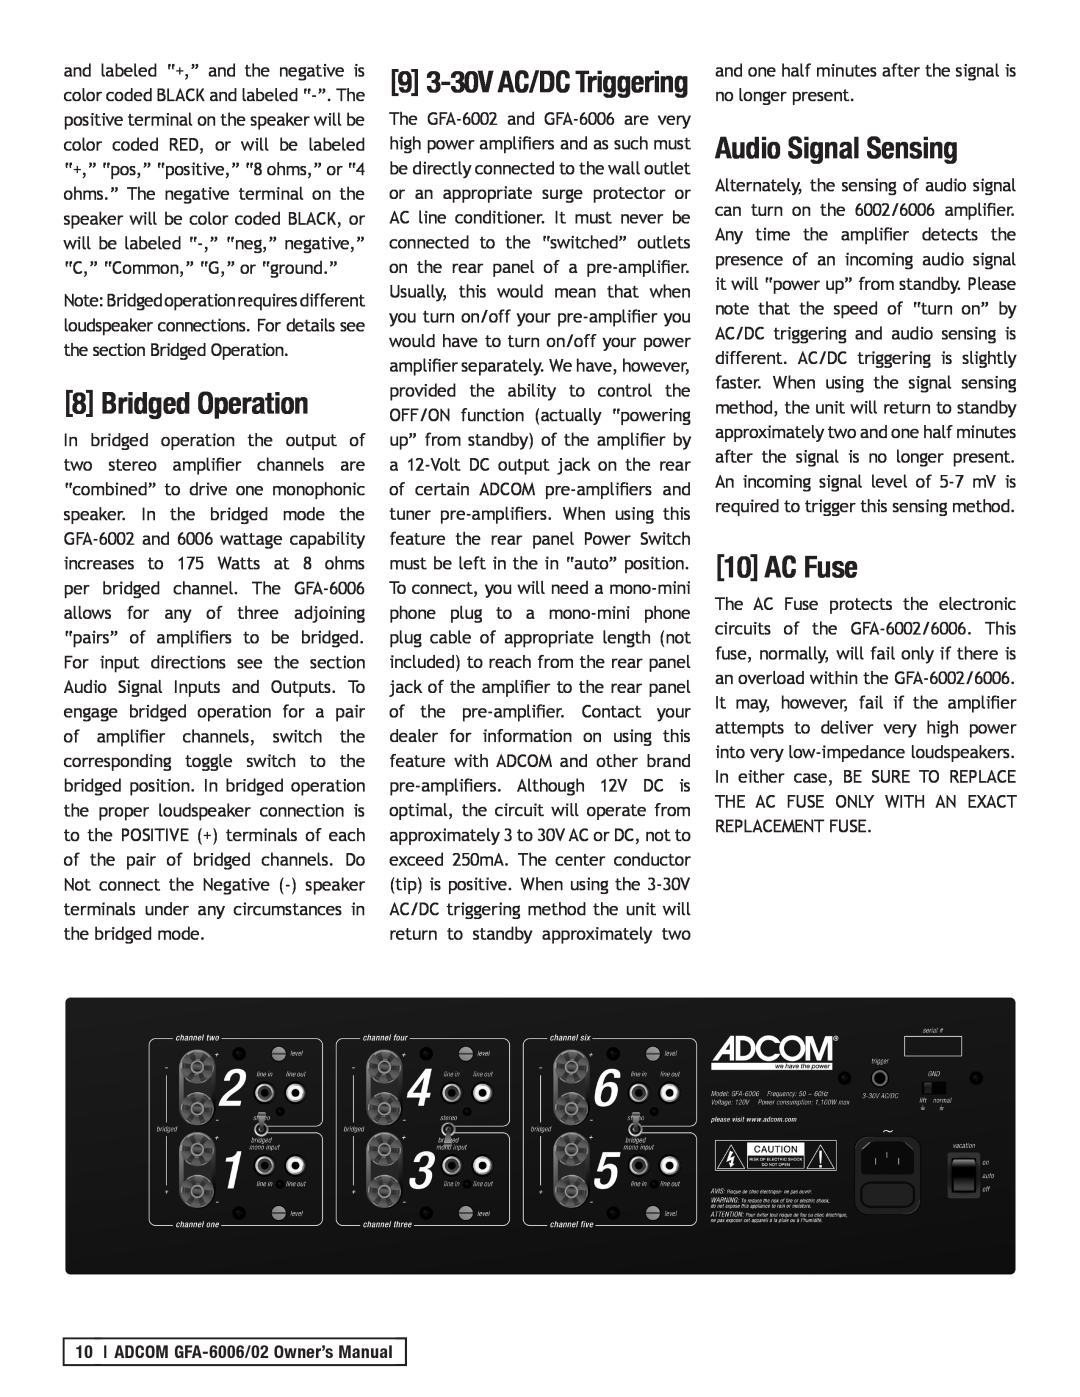 Adcom GFA-6002, GFA-6006 owner manual Bridged Operation, Audio Signal Sensing, AC Fuse, 9 3-30V AC/DC Triggering 